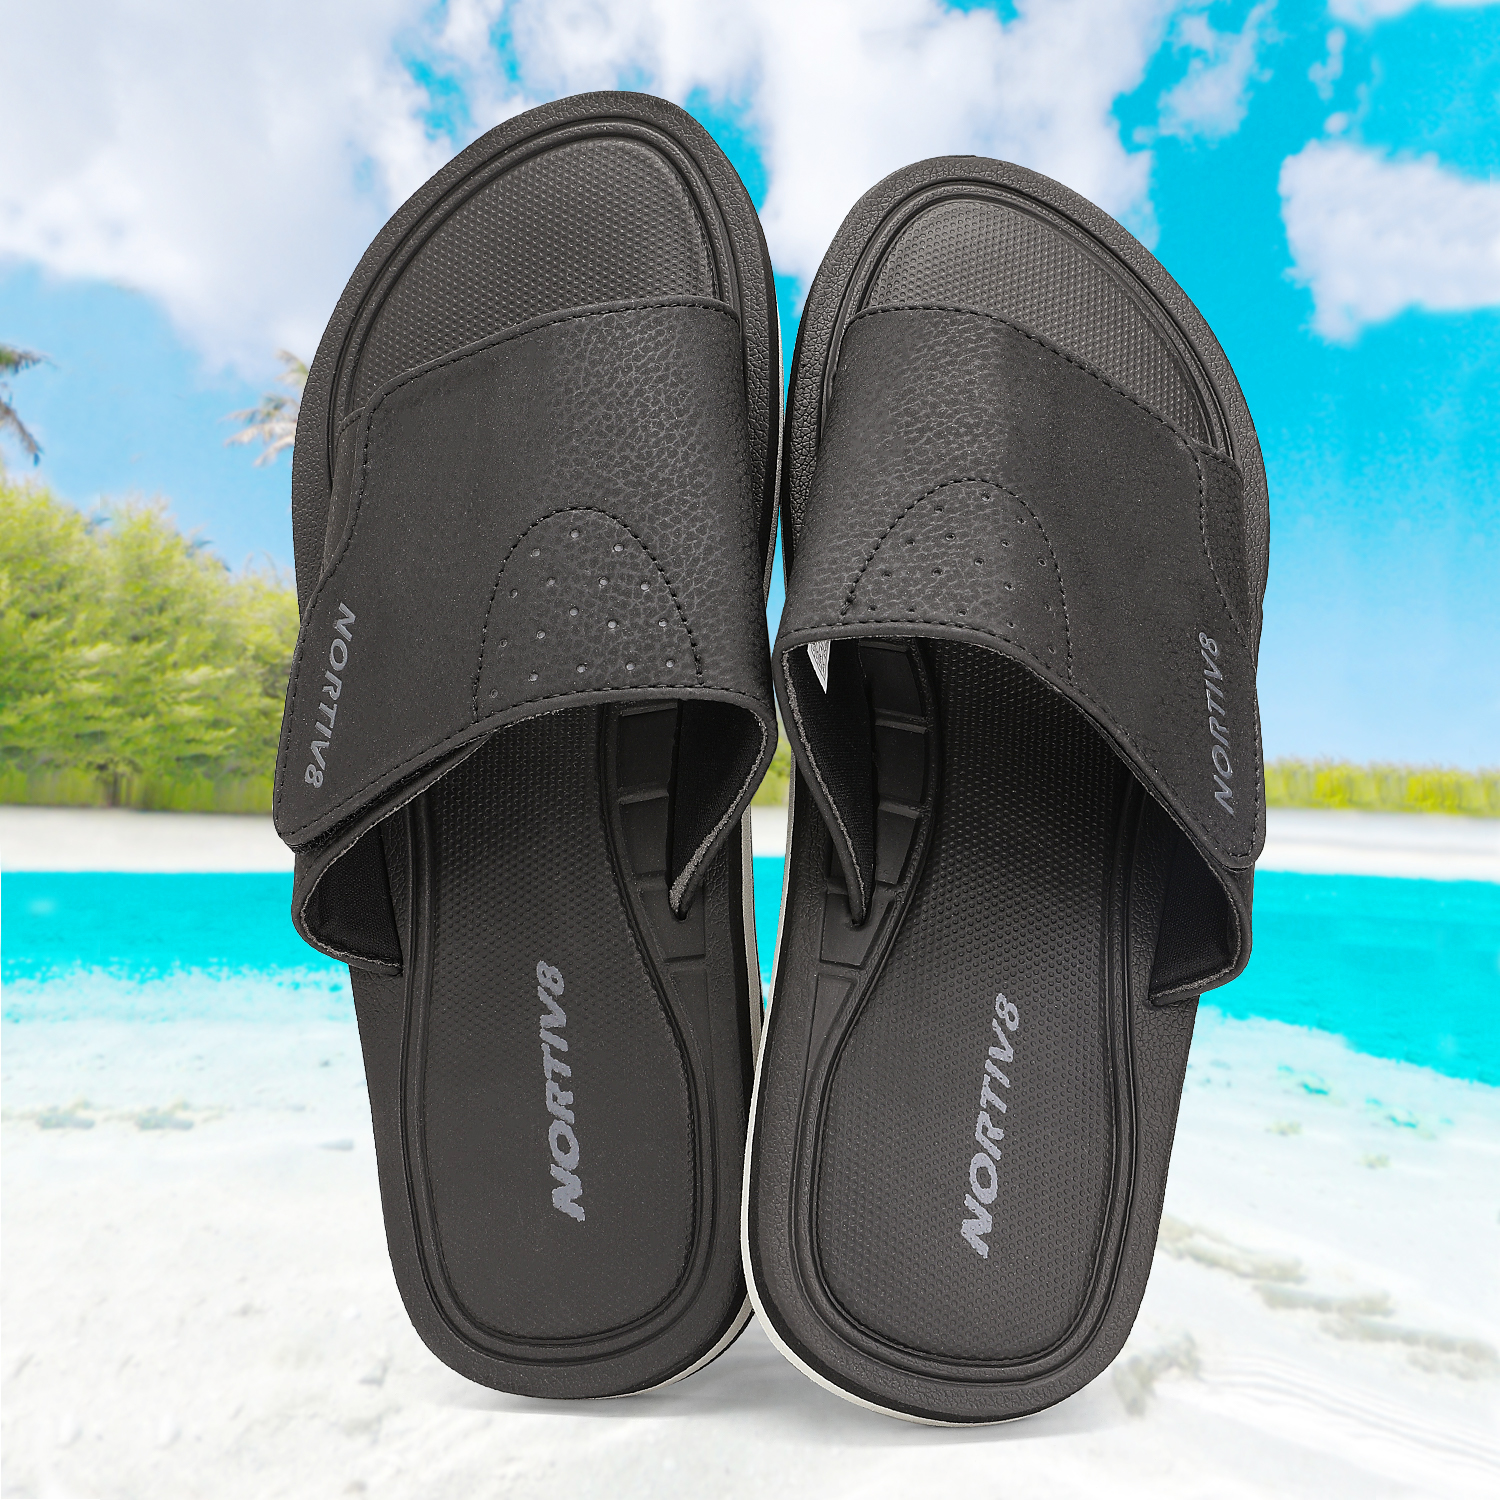 Nortiv 8 Men's Memory Foam Adjustable Slide Sandals Comfort Lightweight Beach Shoes Summer Outdoor Slipper Fusion Black Size 14 - image 5 of 5